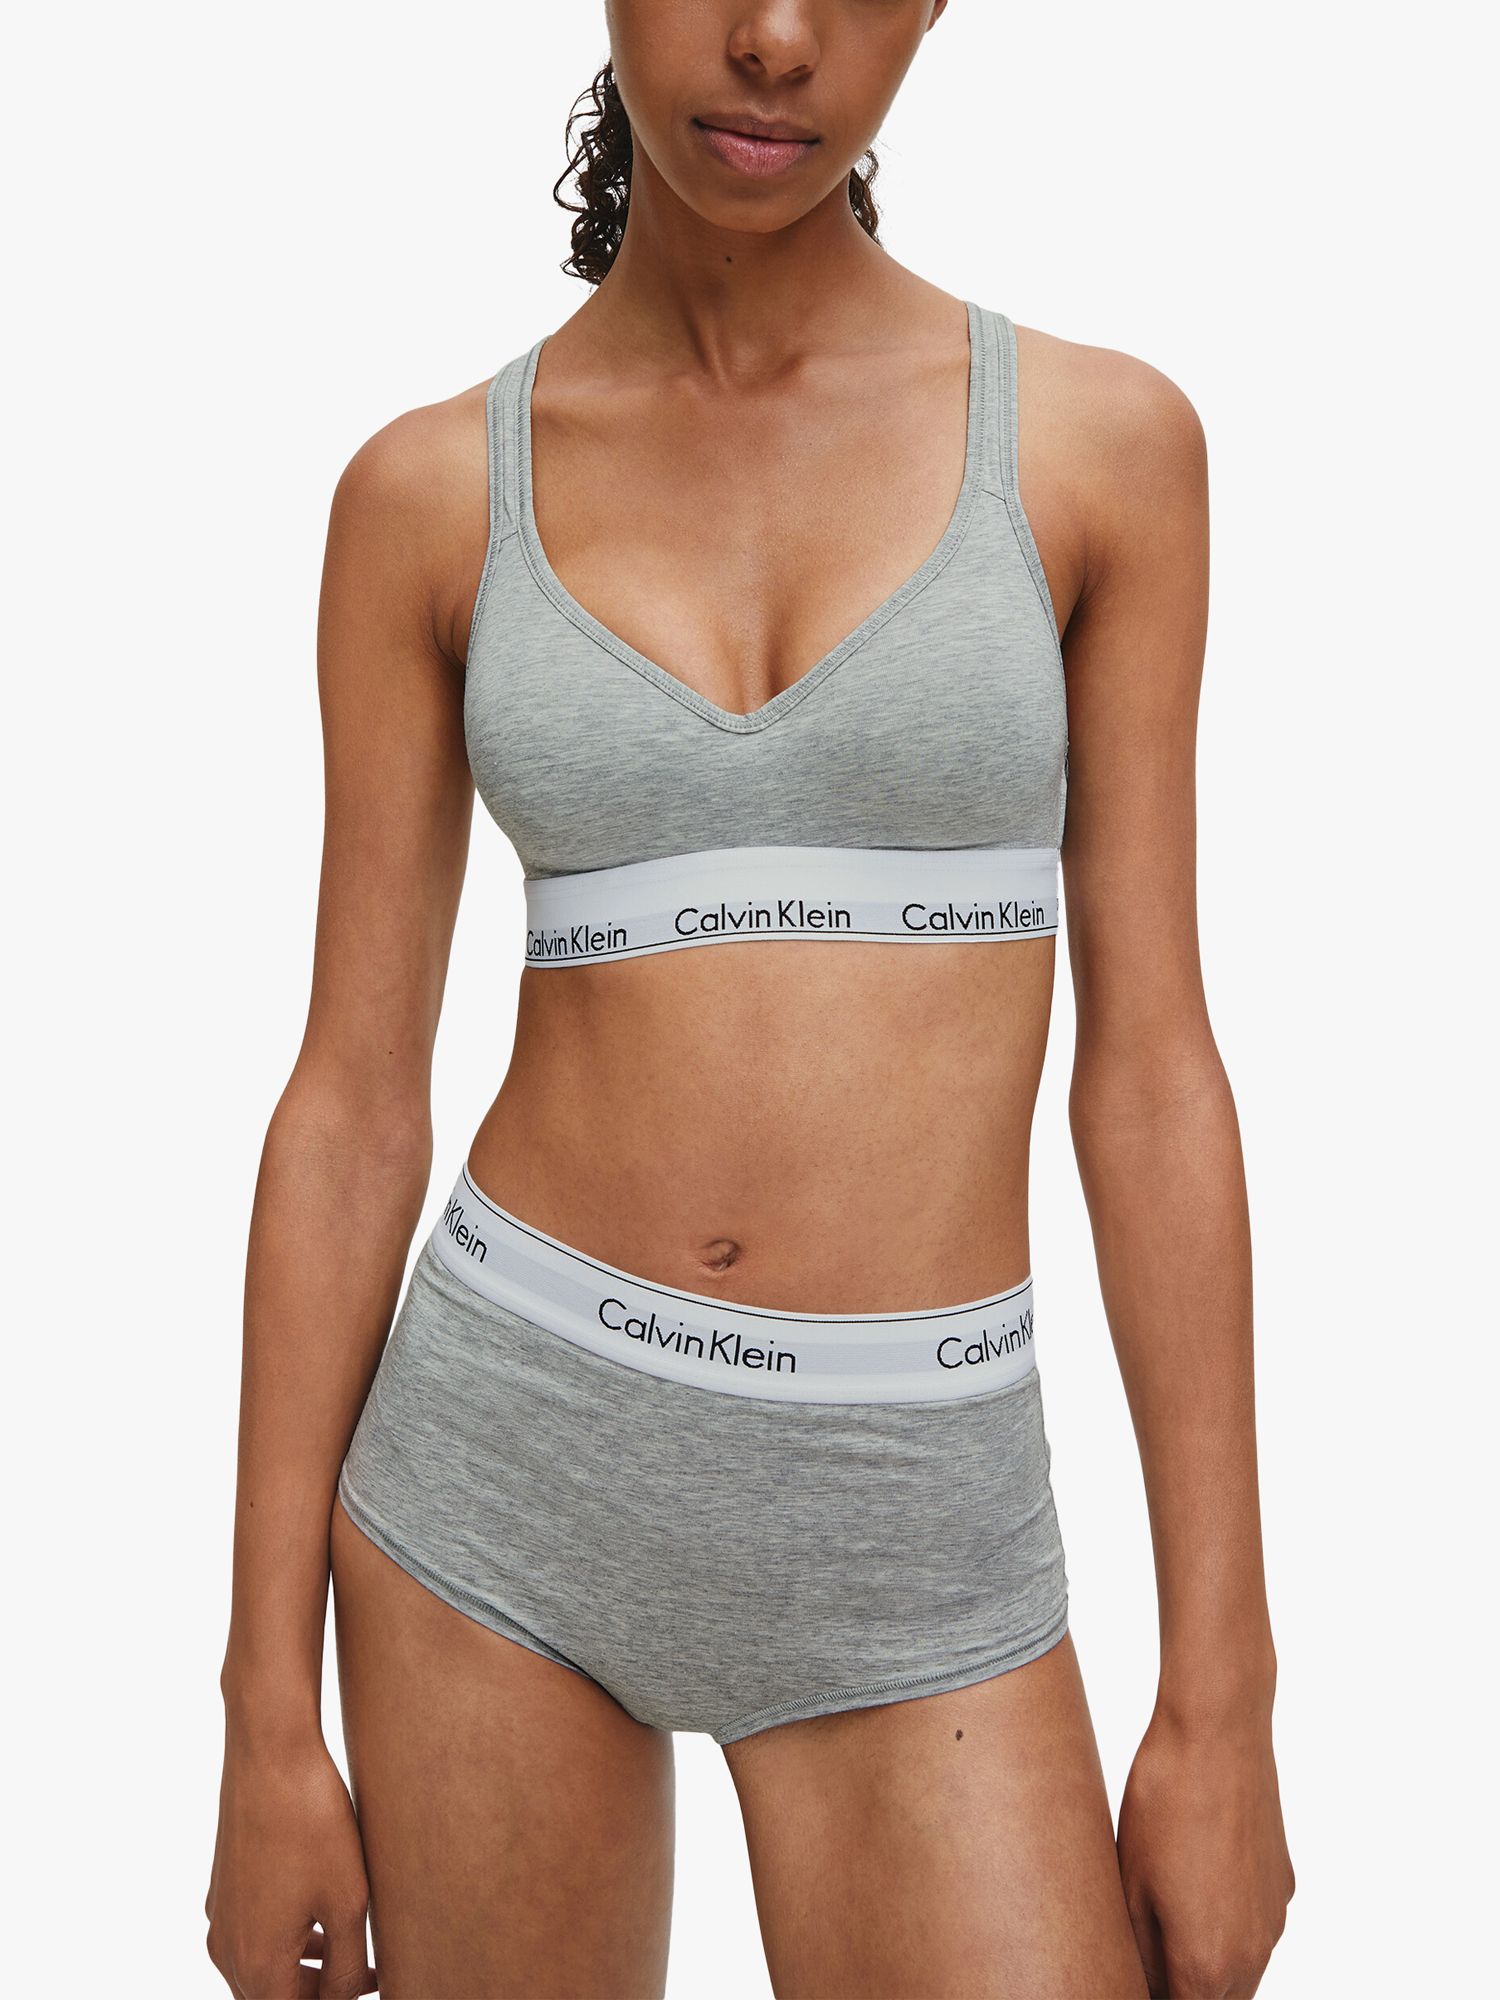  Calvin Klein Girl's Modern Cotton Bralette Underwear, black,  Heather Grey, Small, S,Little Girls: Clothing, Shoes & Jewelry